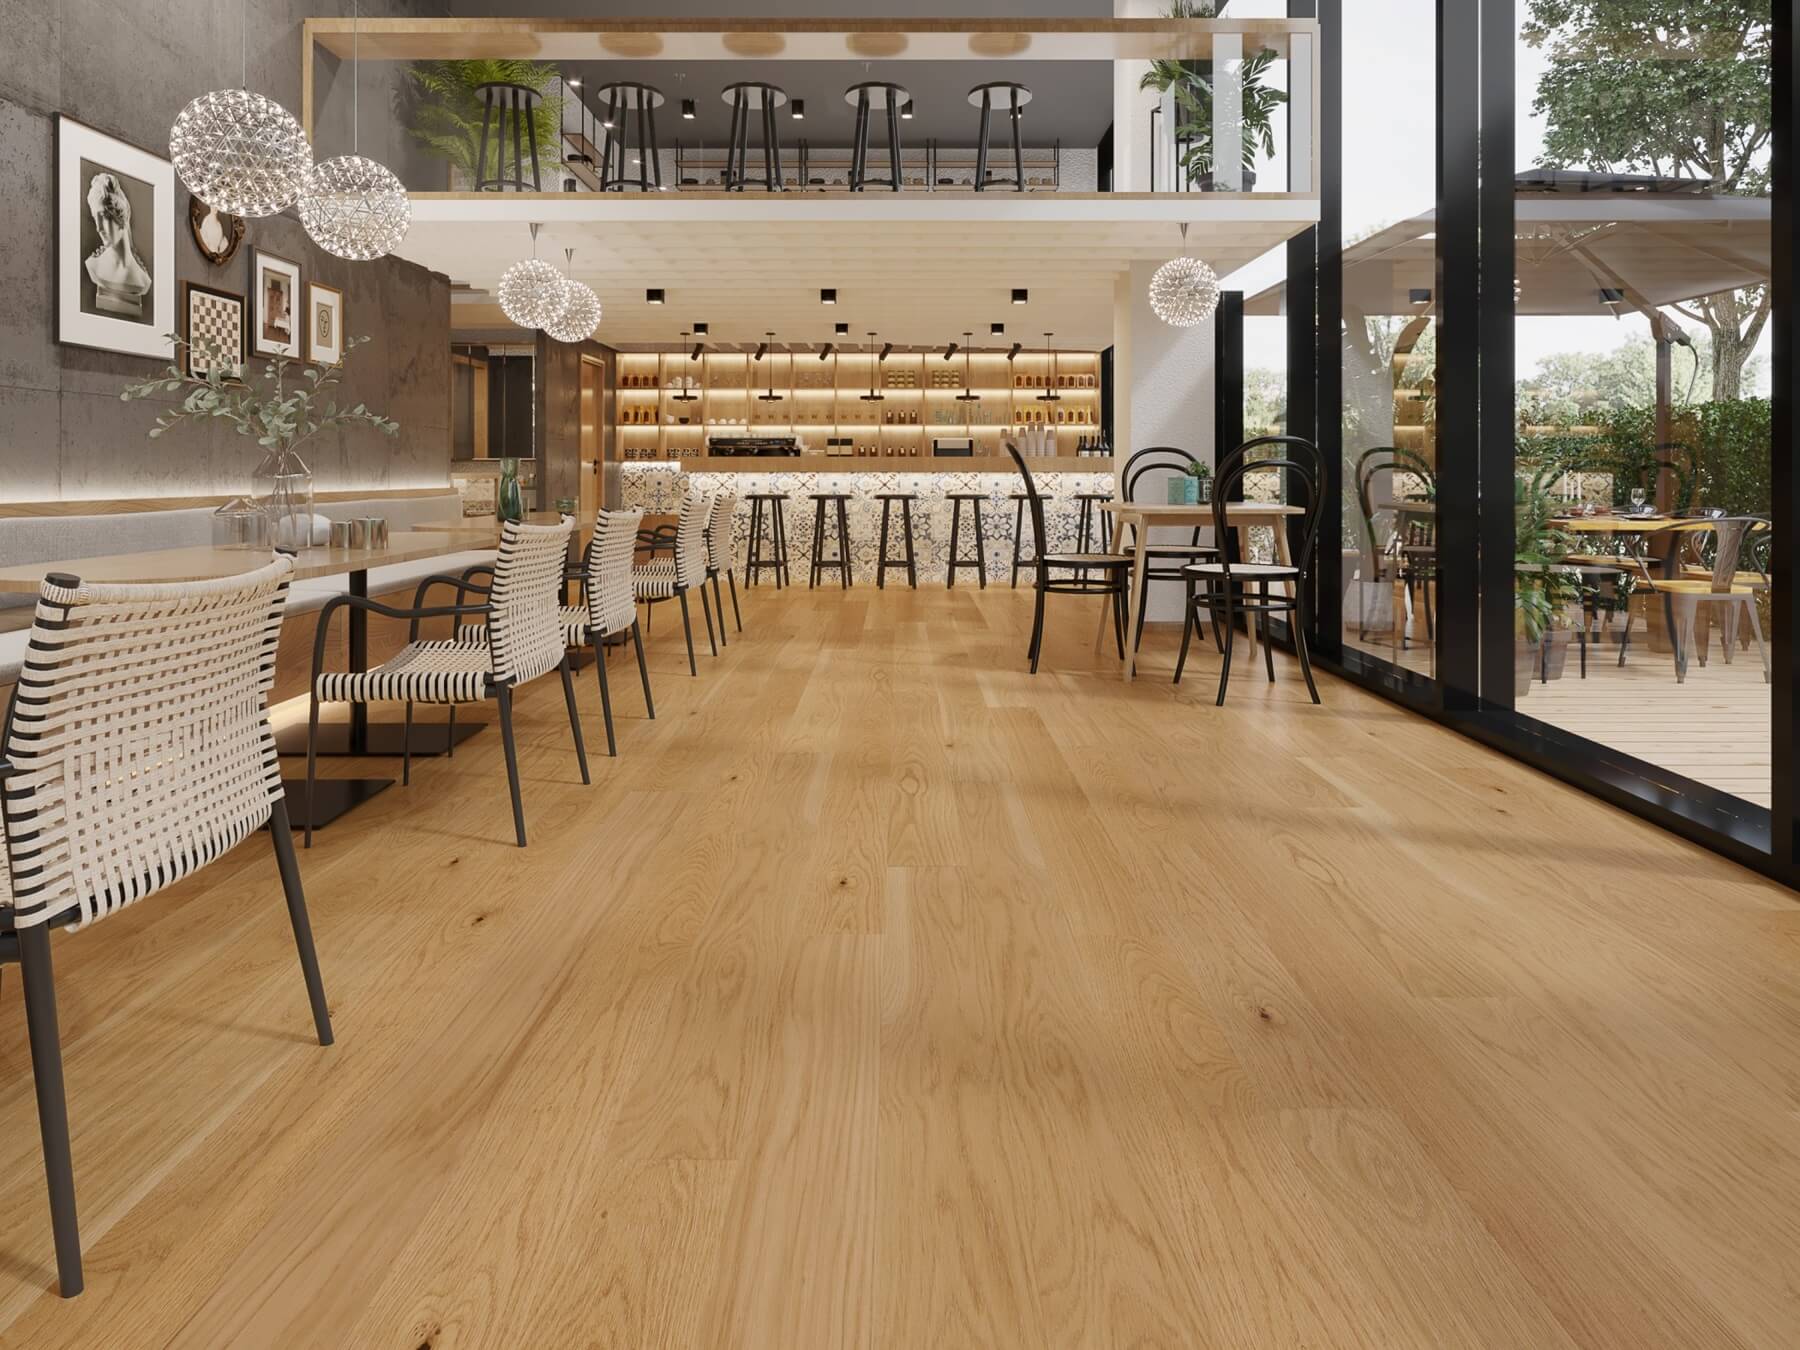 Oak Natural flooring in commercial bar